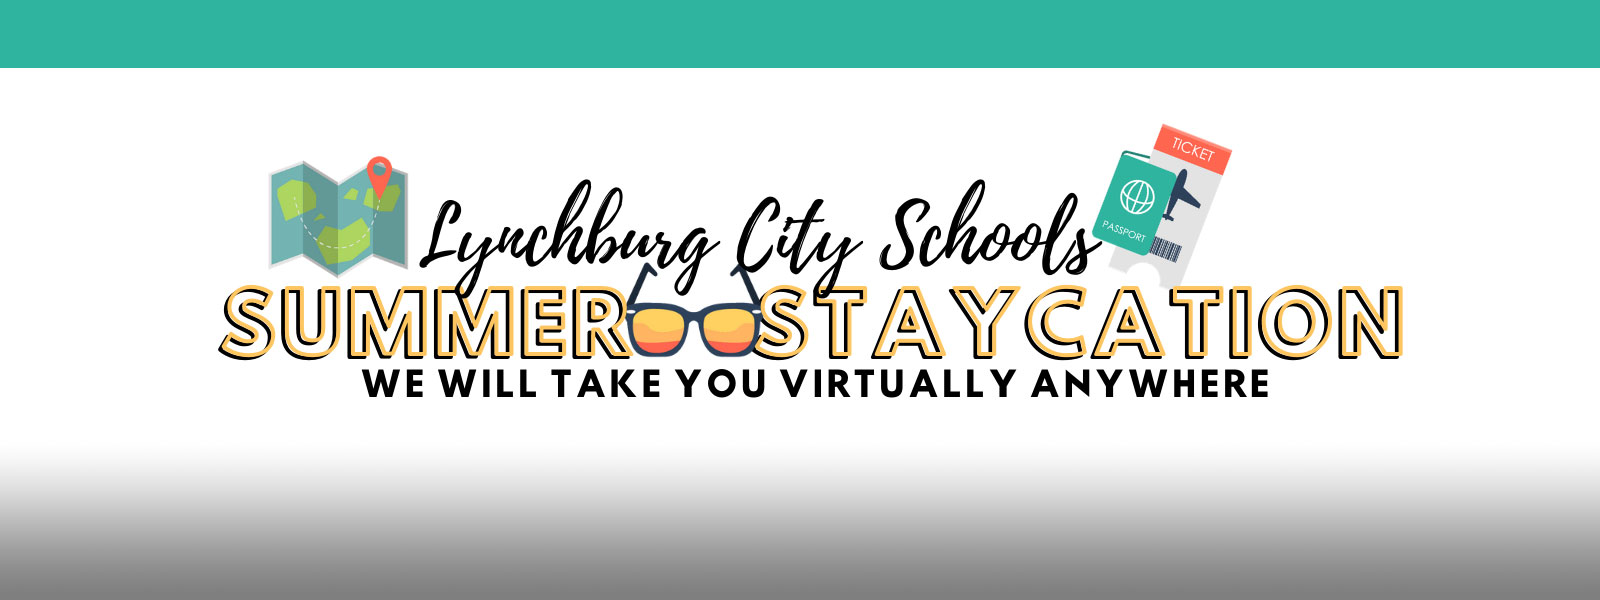 Lynchburg City Schools Summer Staycation - We will take you virtually anywhere